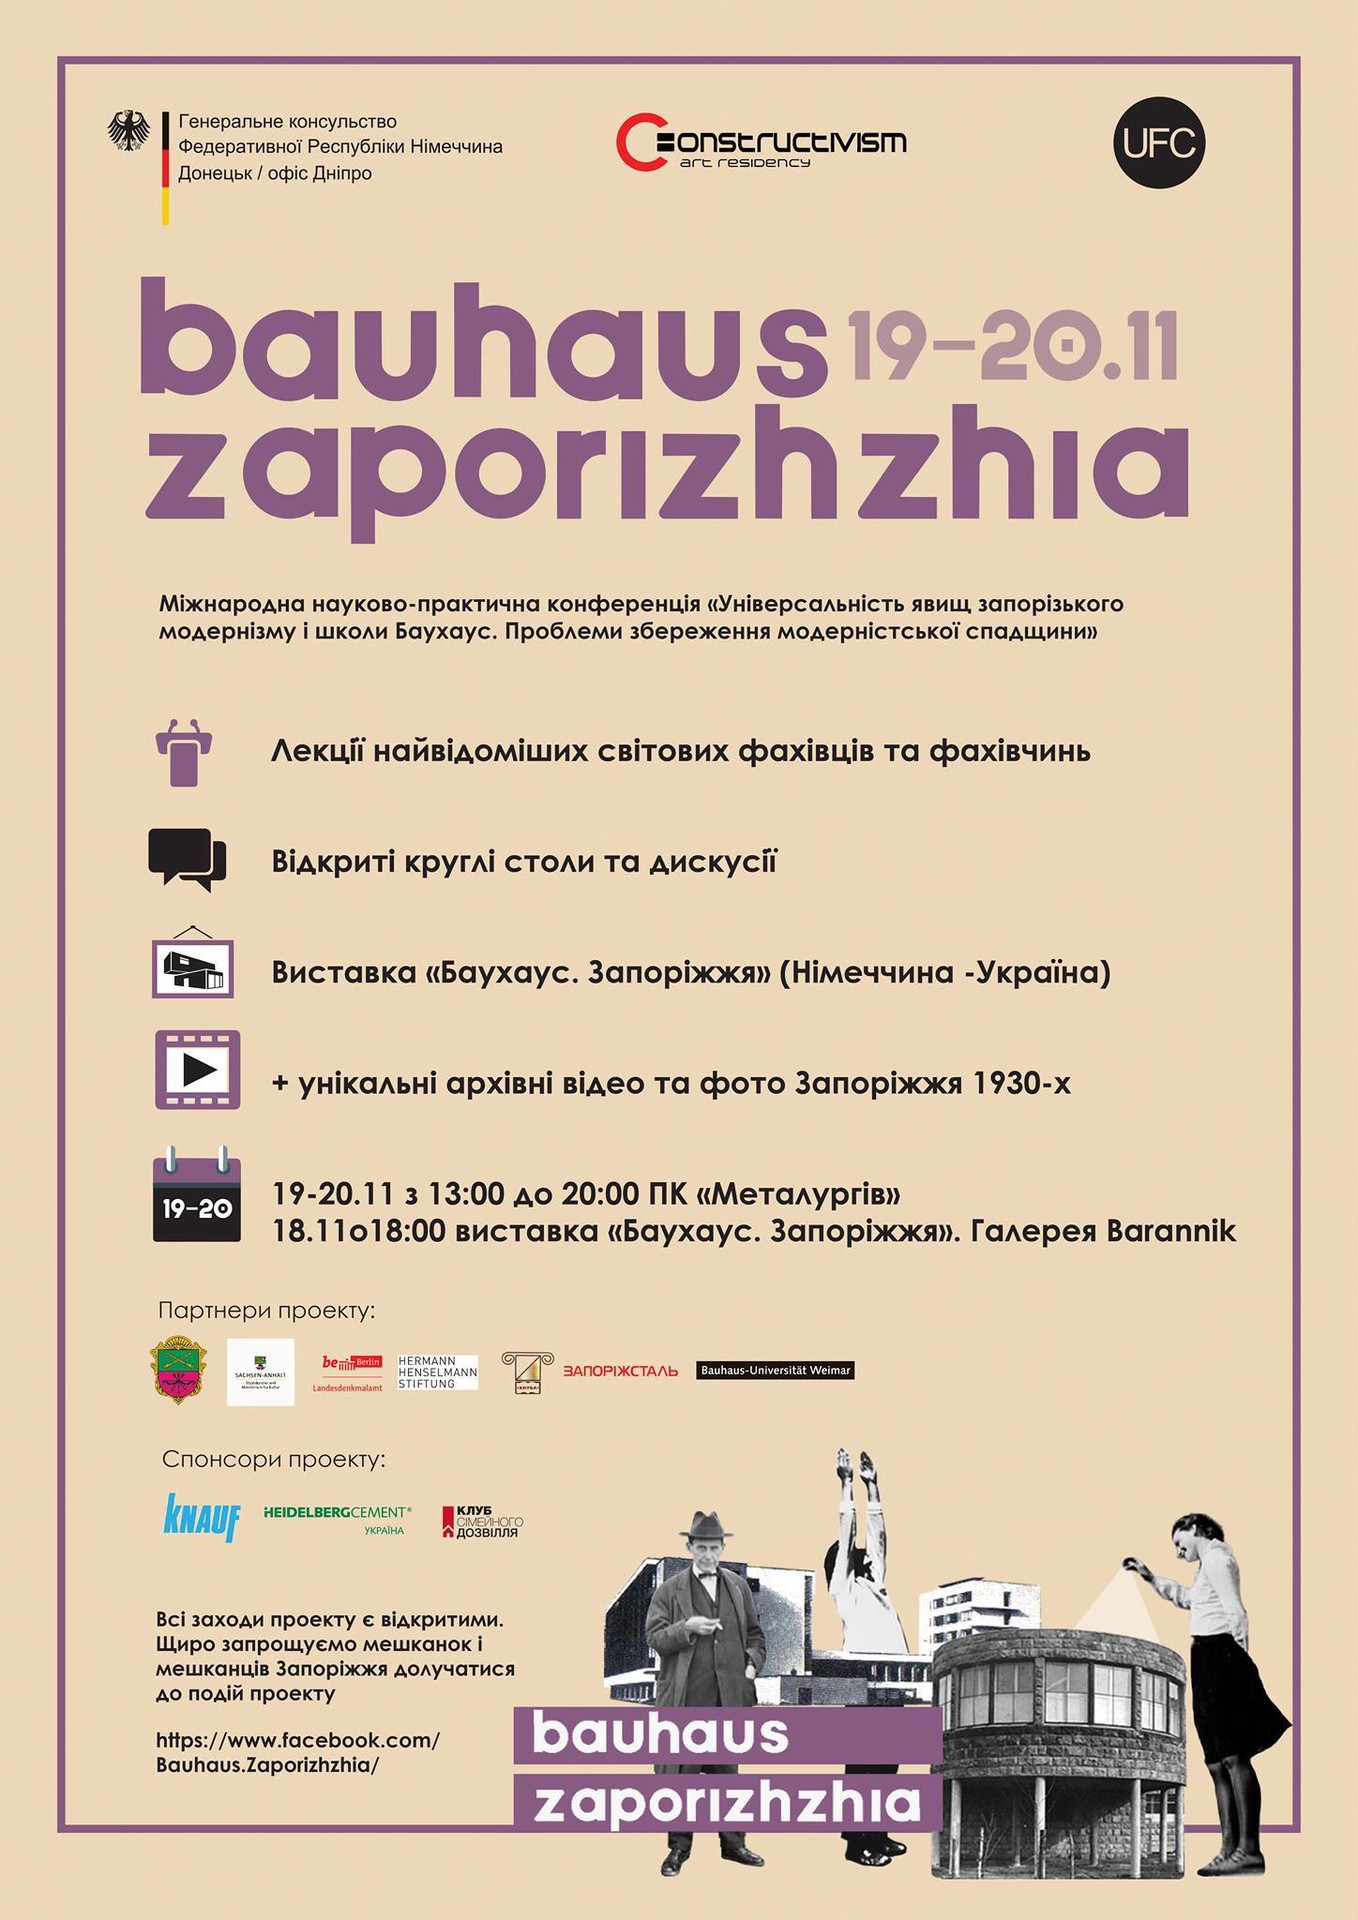 Zaporizhia modernism and Bauhaus school: universality of phenomena. Problems of preserving modernist heritage (Zaporizhia)